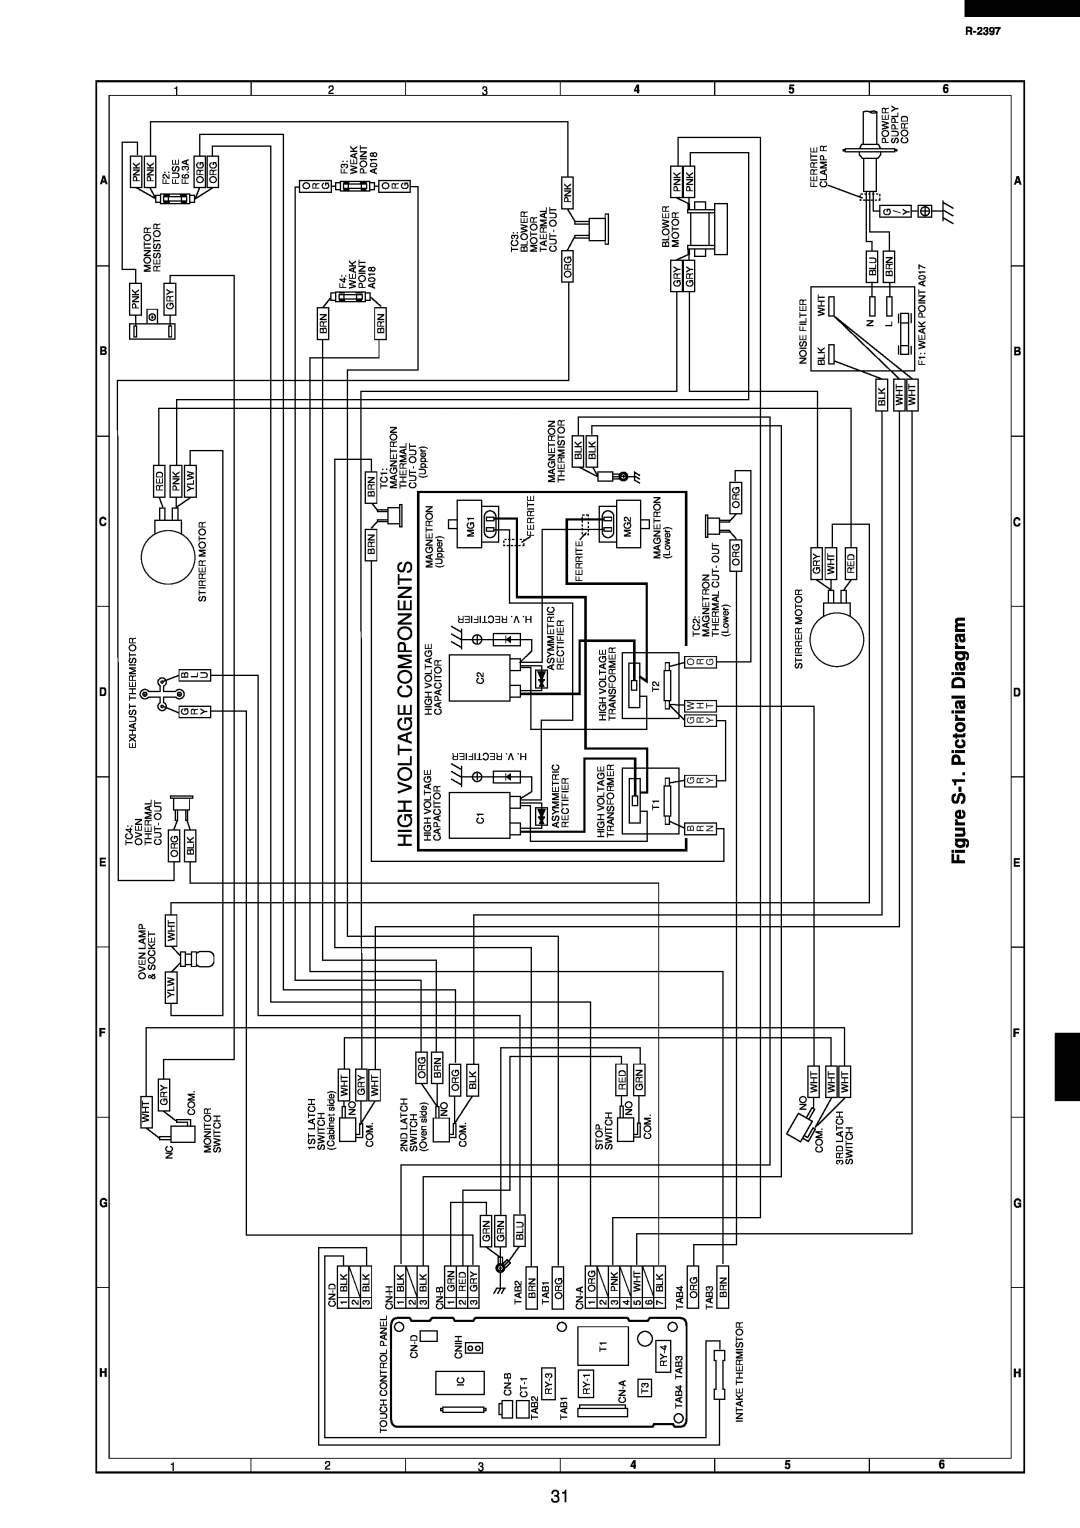 Sharp R-2397 service manual Figure S-1.Pictorial Diagram, High Voltage Components, 1 2 